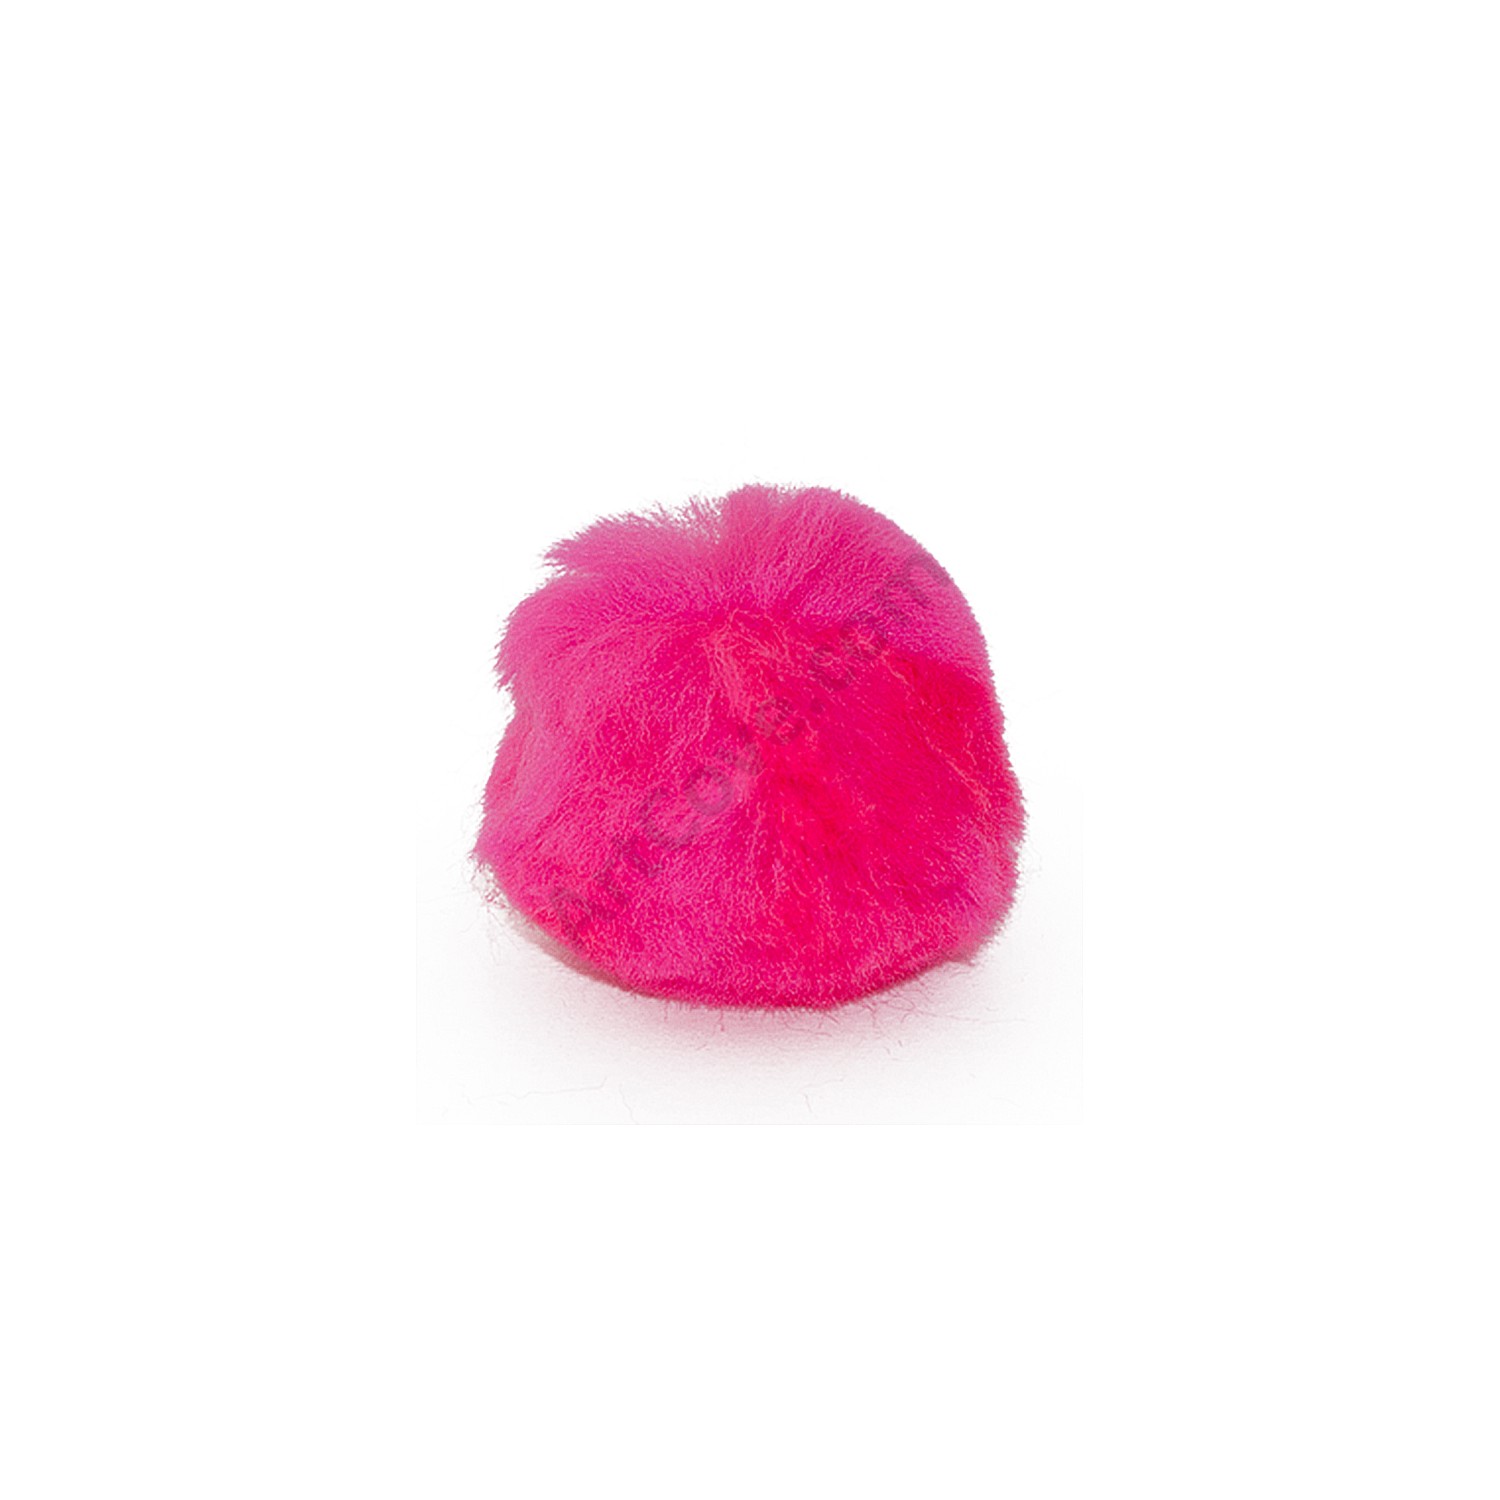 Small Pom Poms in Pink Colour/craft Pom Pom Ball/poly Wool Pom